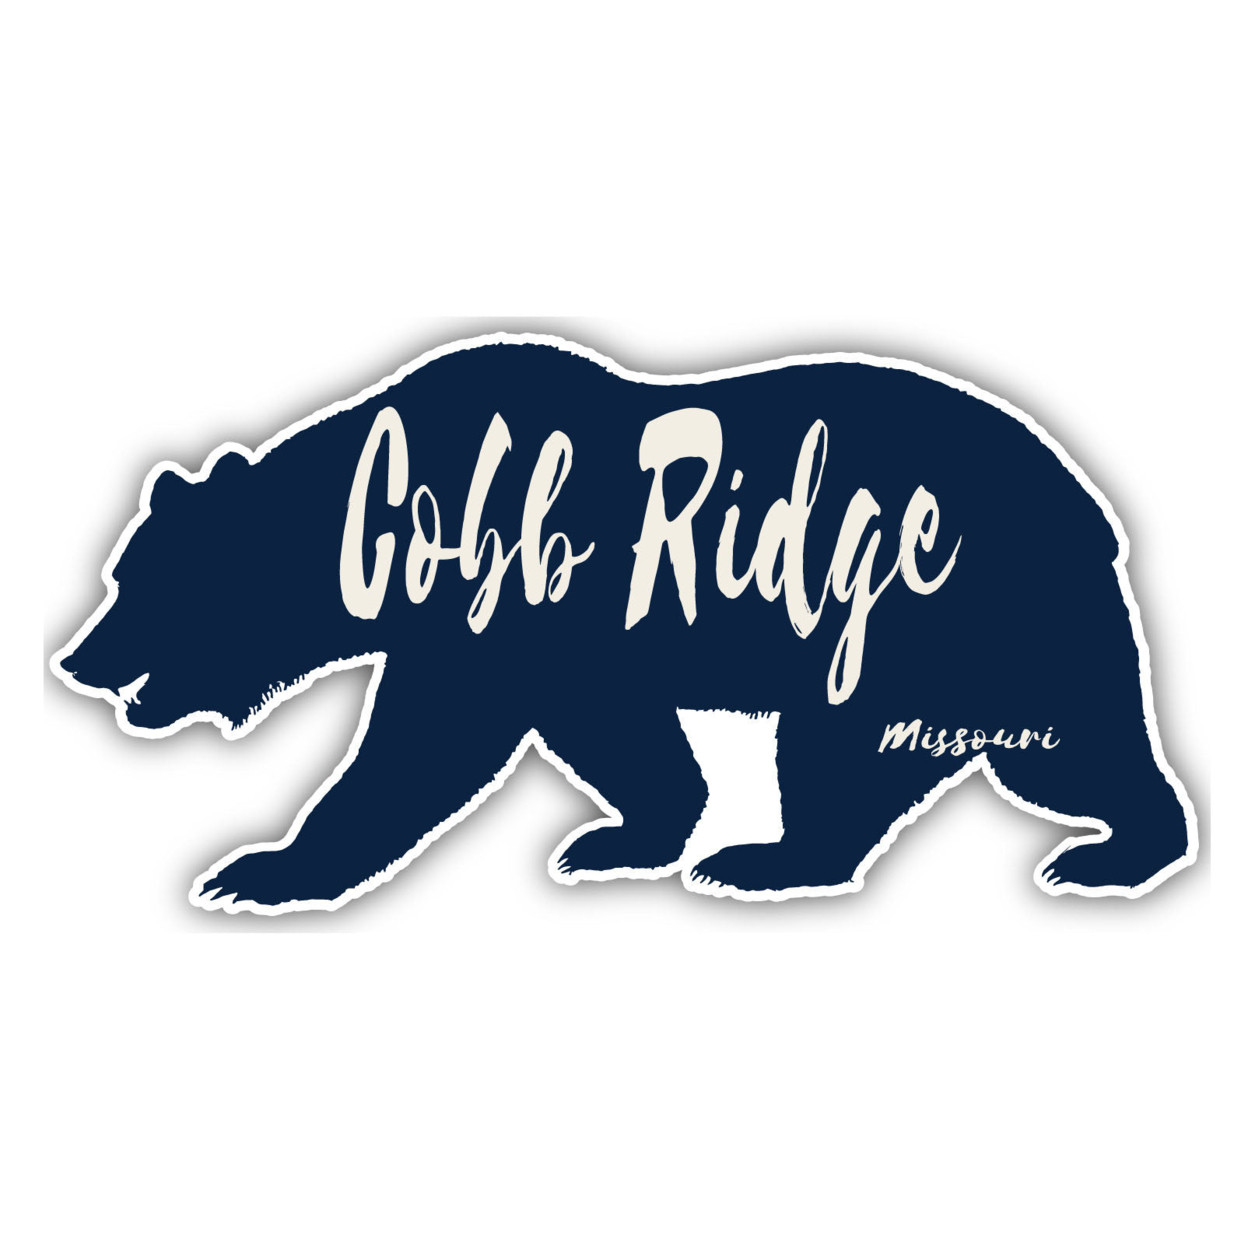 Cobb Ridge Missouri Souvenir Decorative Stickers (Choose Theme And Size) - 4-Pack, 6-Inch, Bear